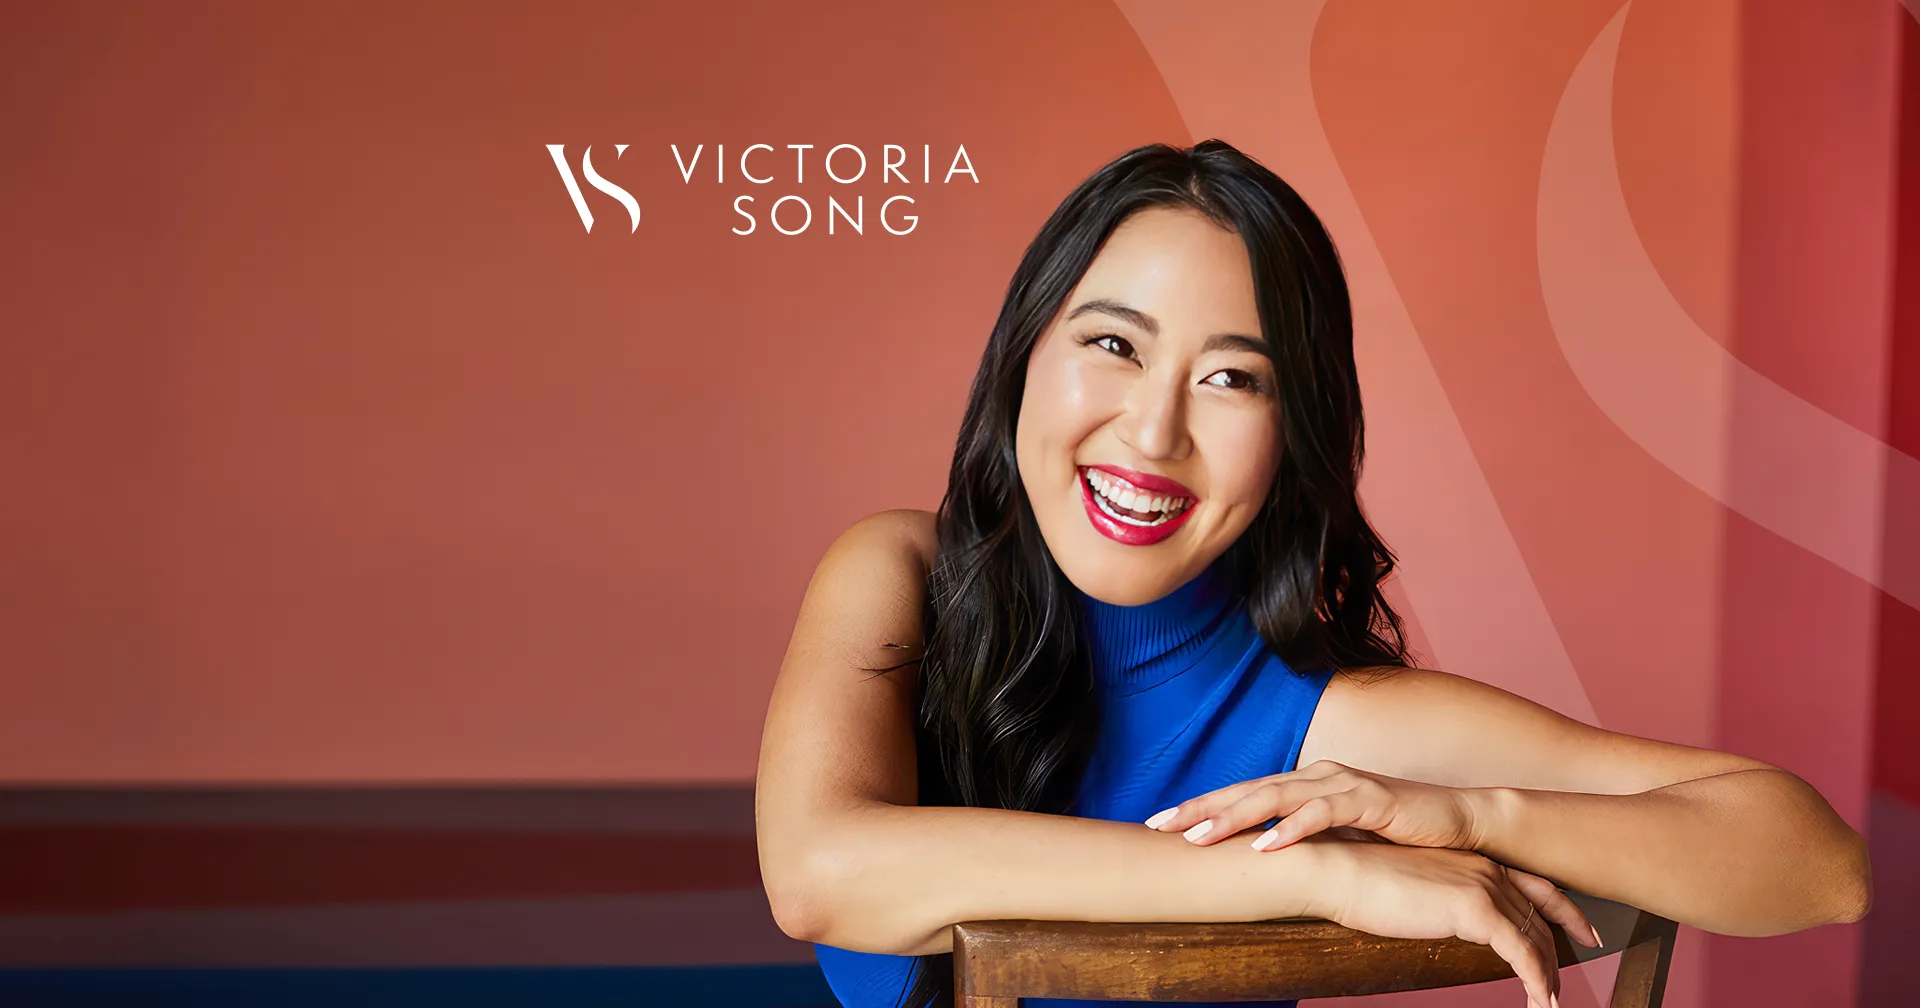 Victoria Song - Wikipedia